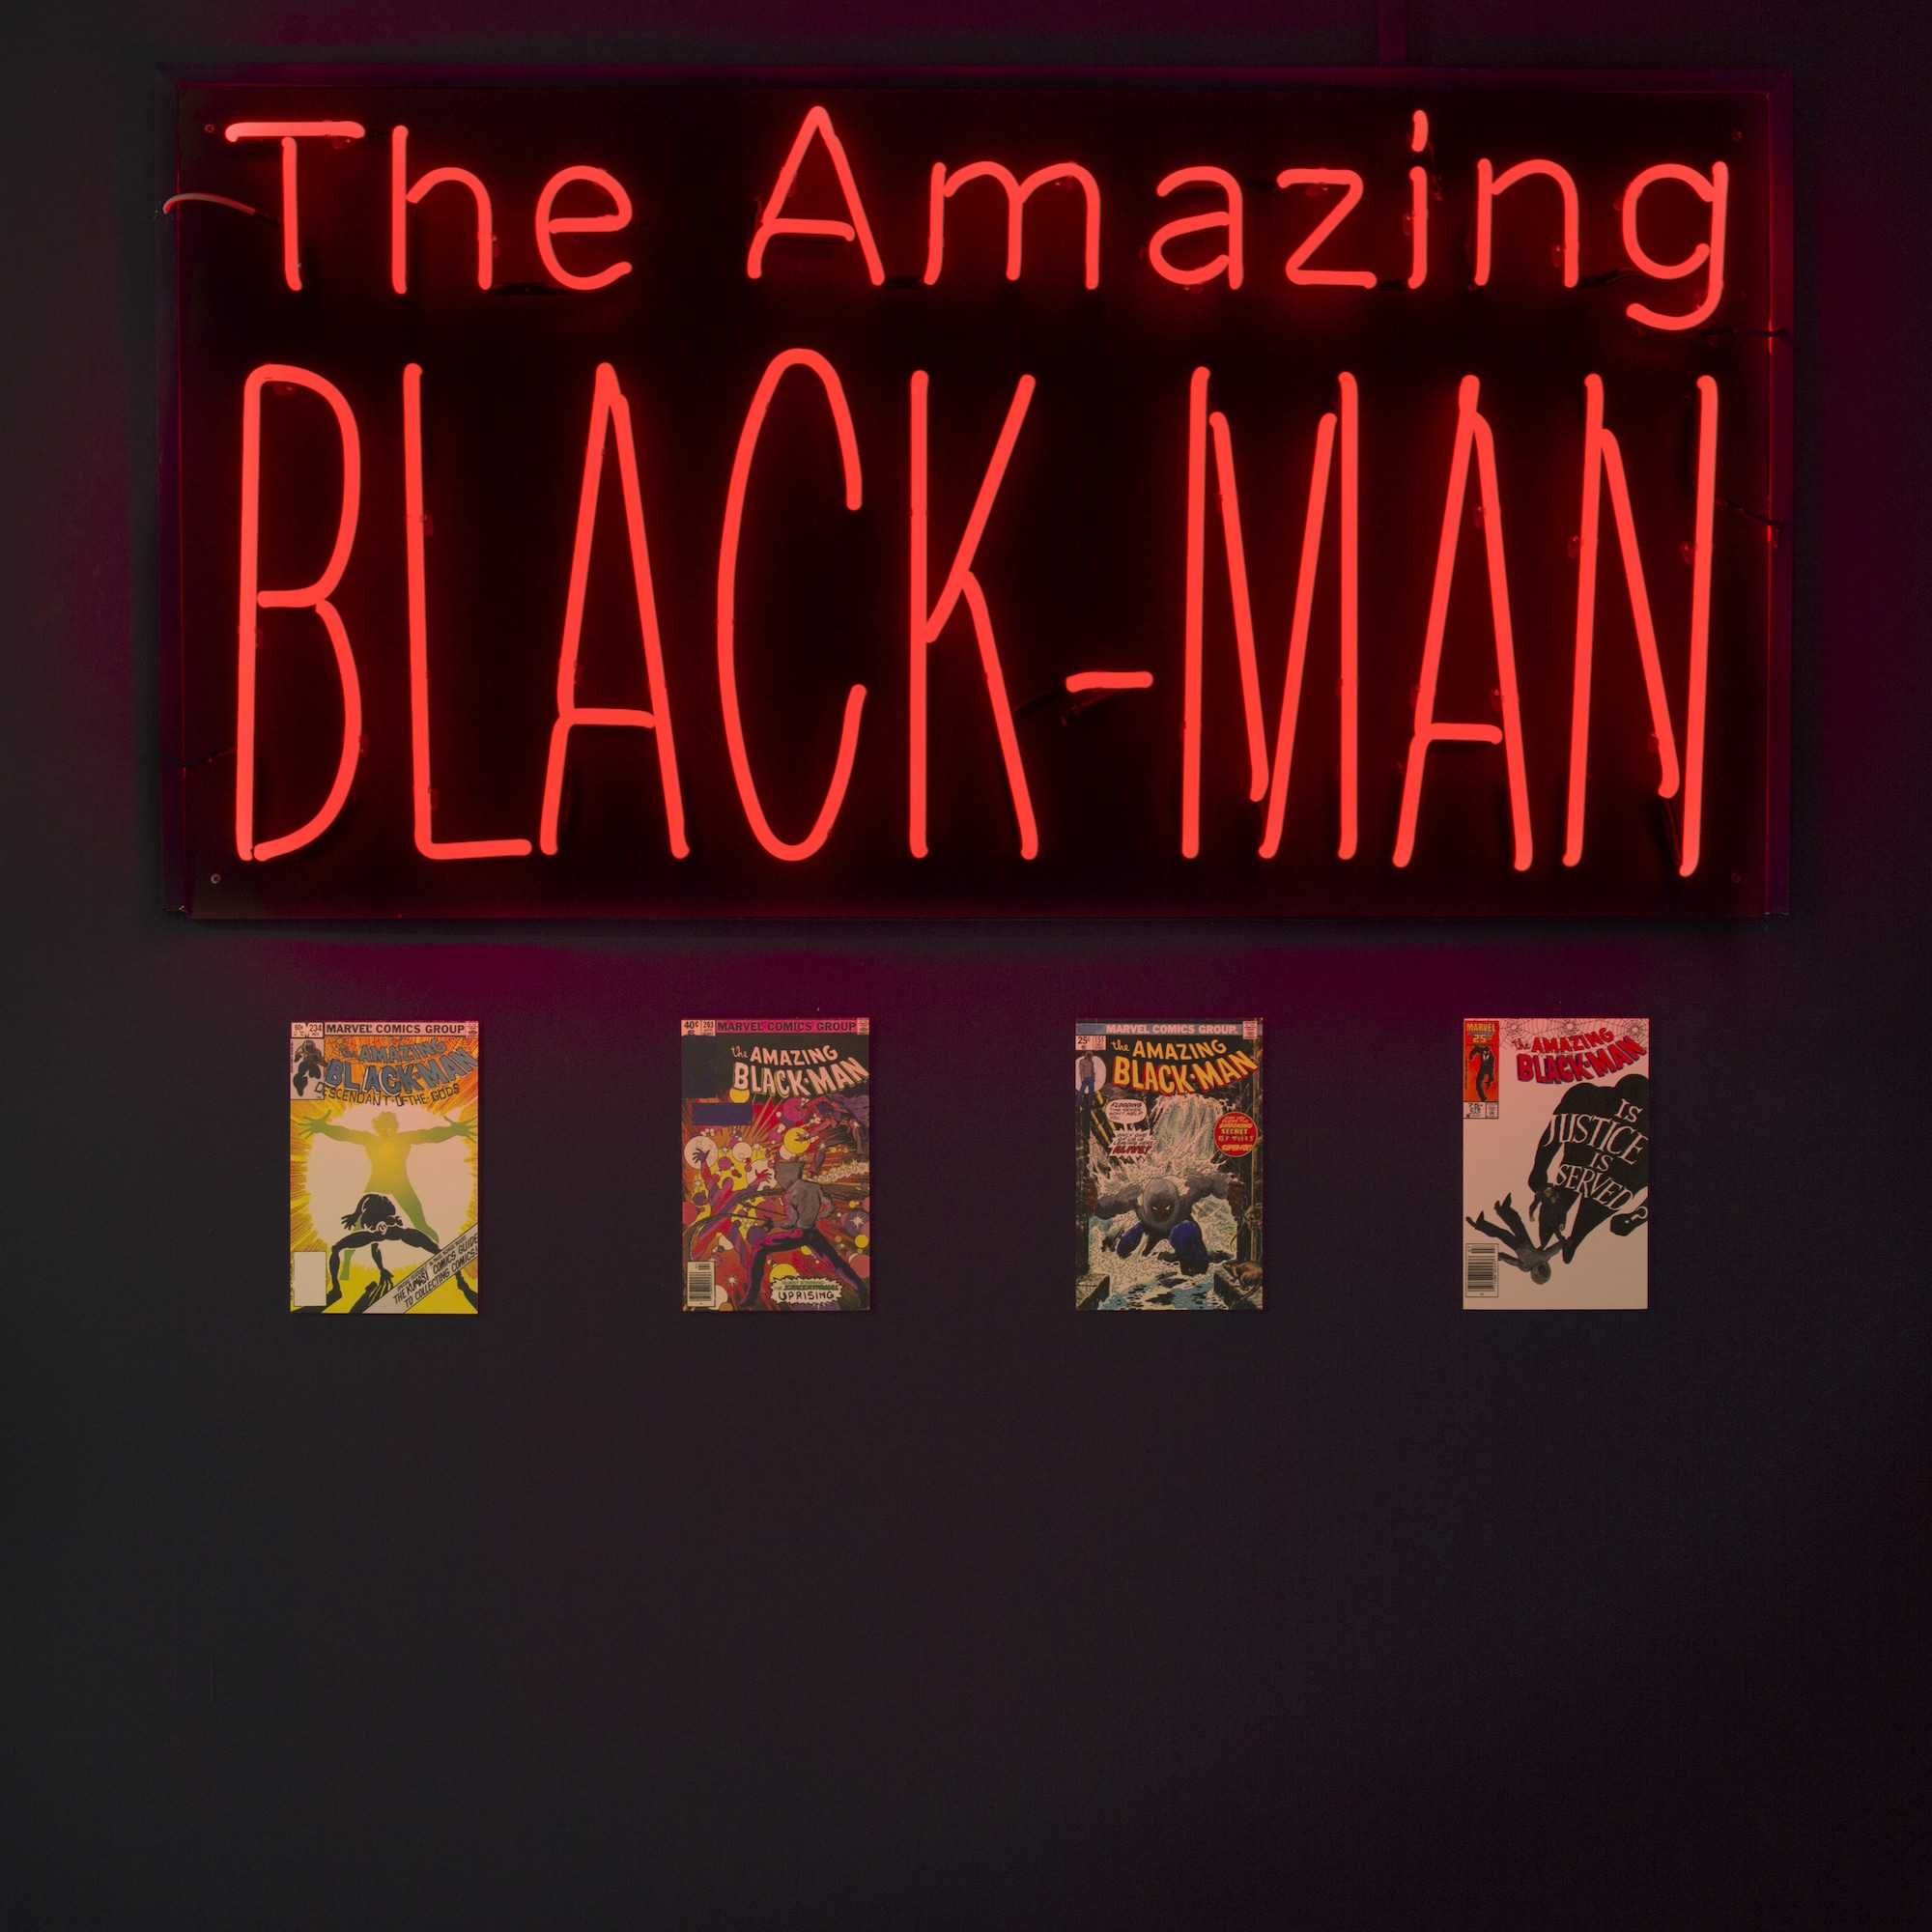 5662Kumasi J Barnett.  The Amazing Black-Man. 2018.  Neon glass.  750 x 150 cm. Installation view.